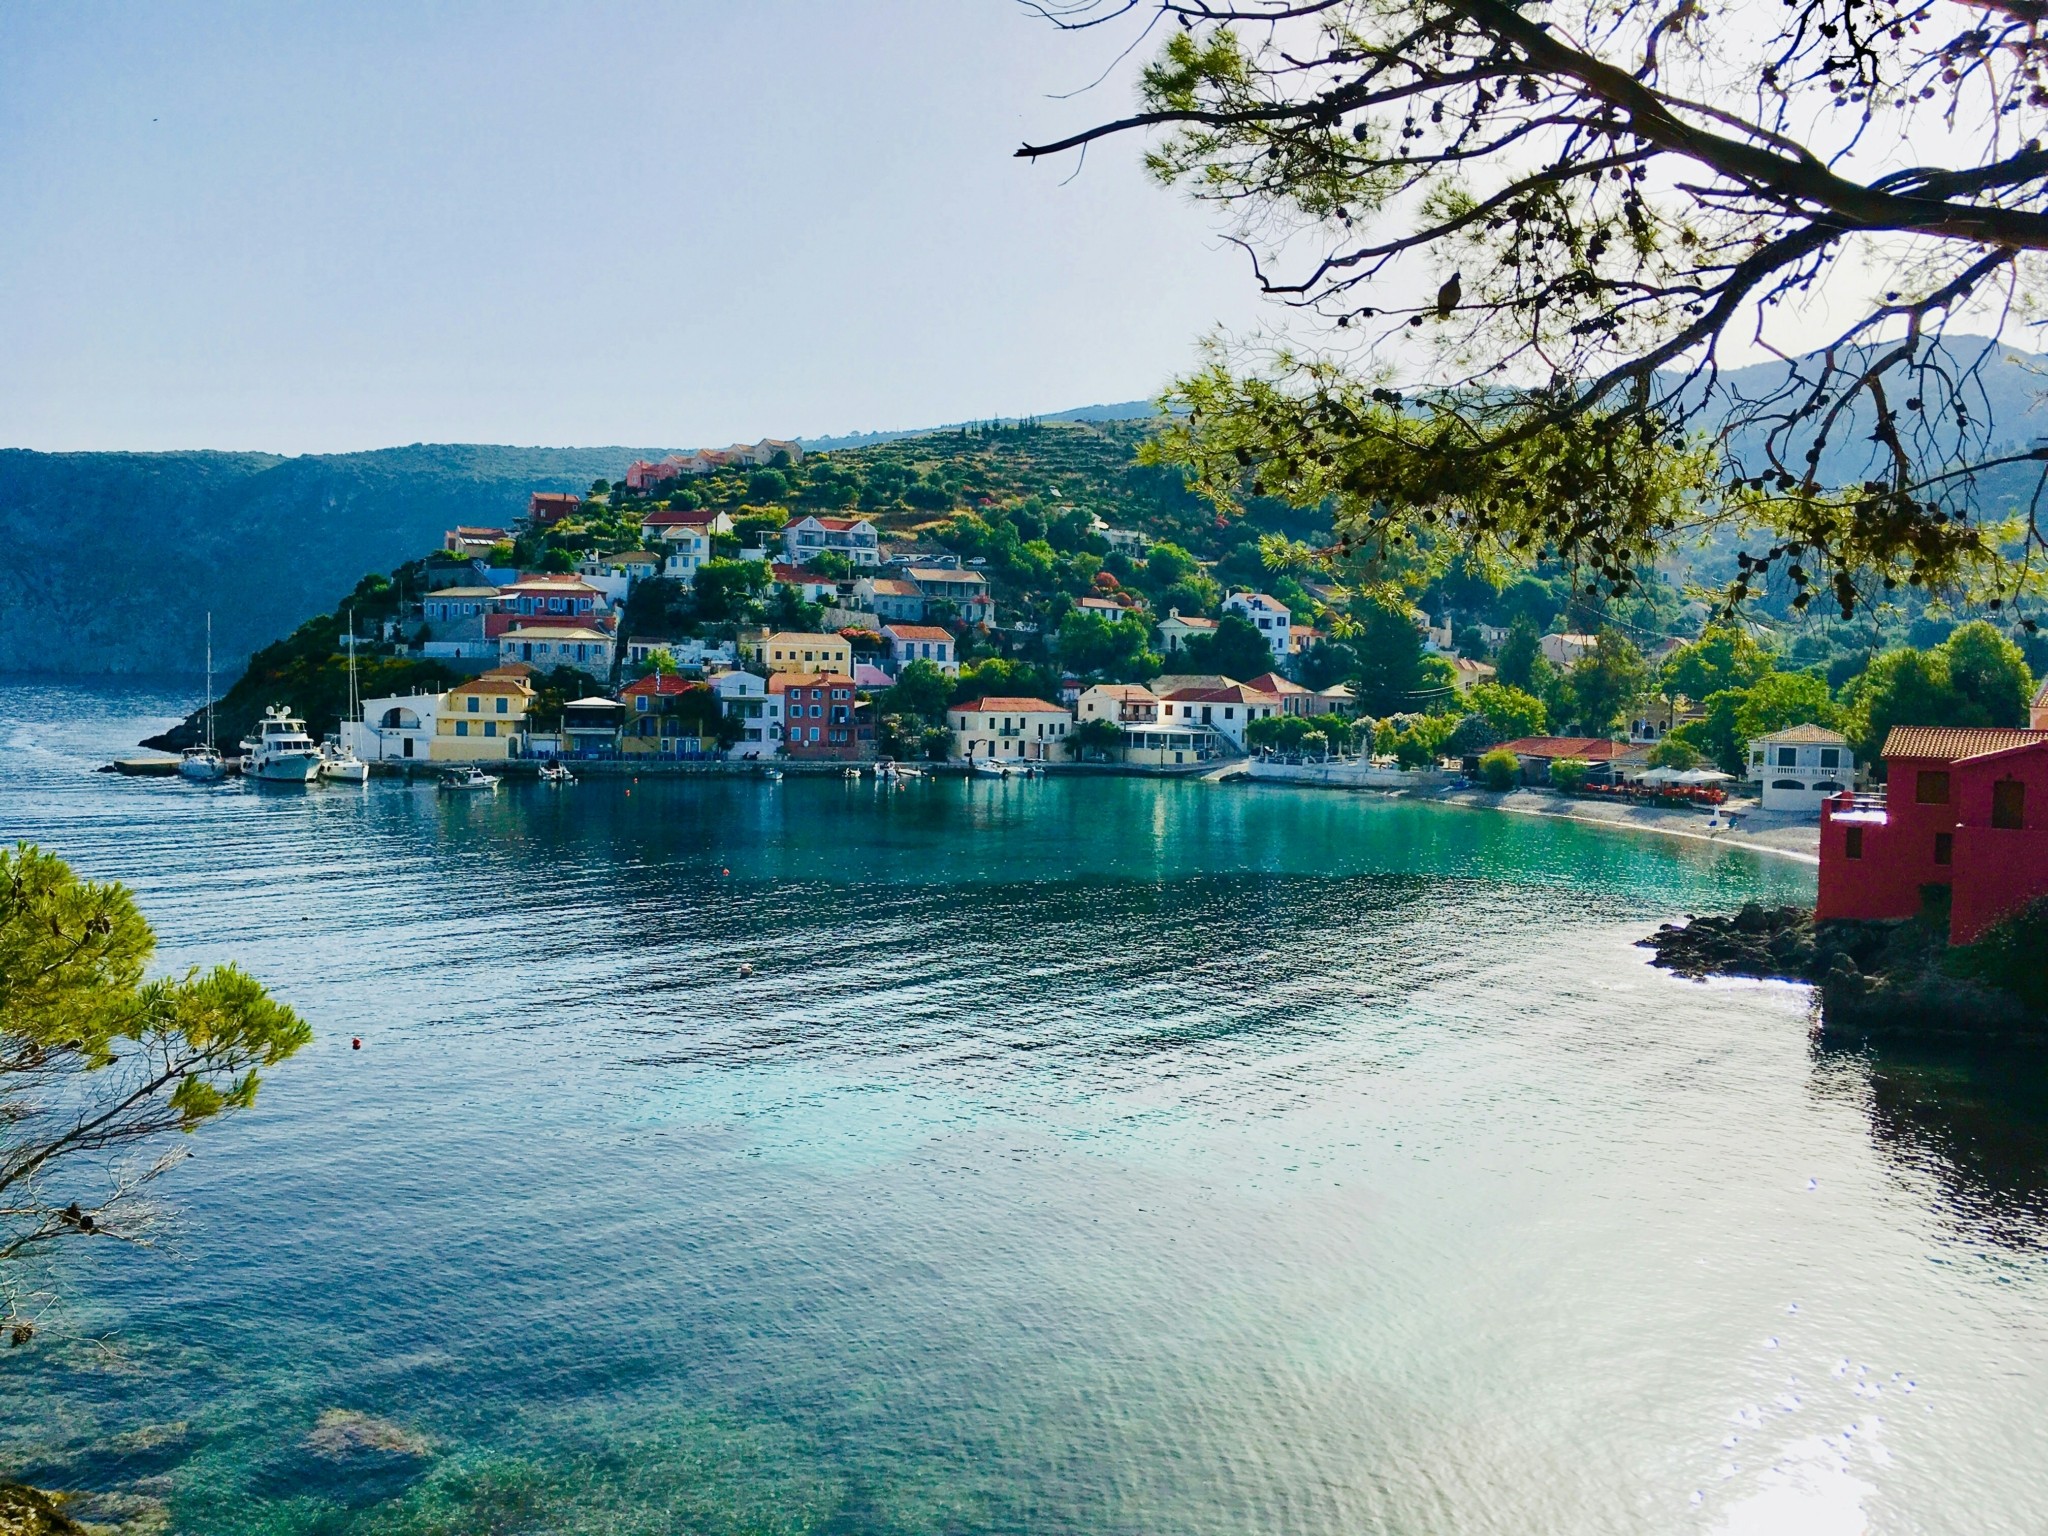 DiscoverCars.com: Ενα ελληνικό νησί στους πιο δημοφιλείς προορισμούς στον κόσμο για οδήγηση σε γραφικές διαδρομές